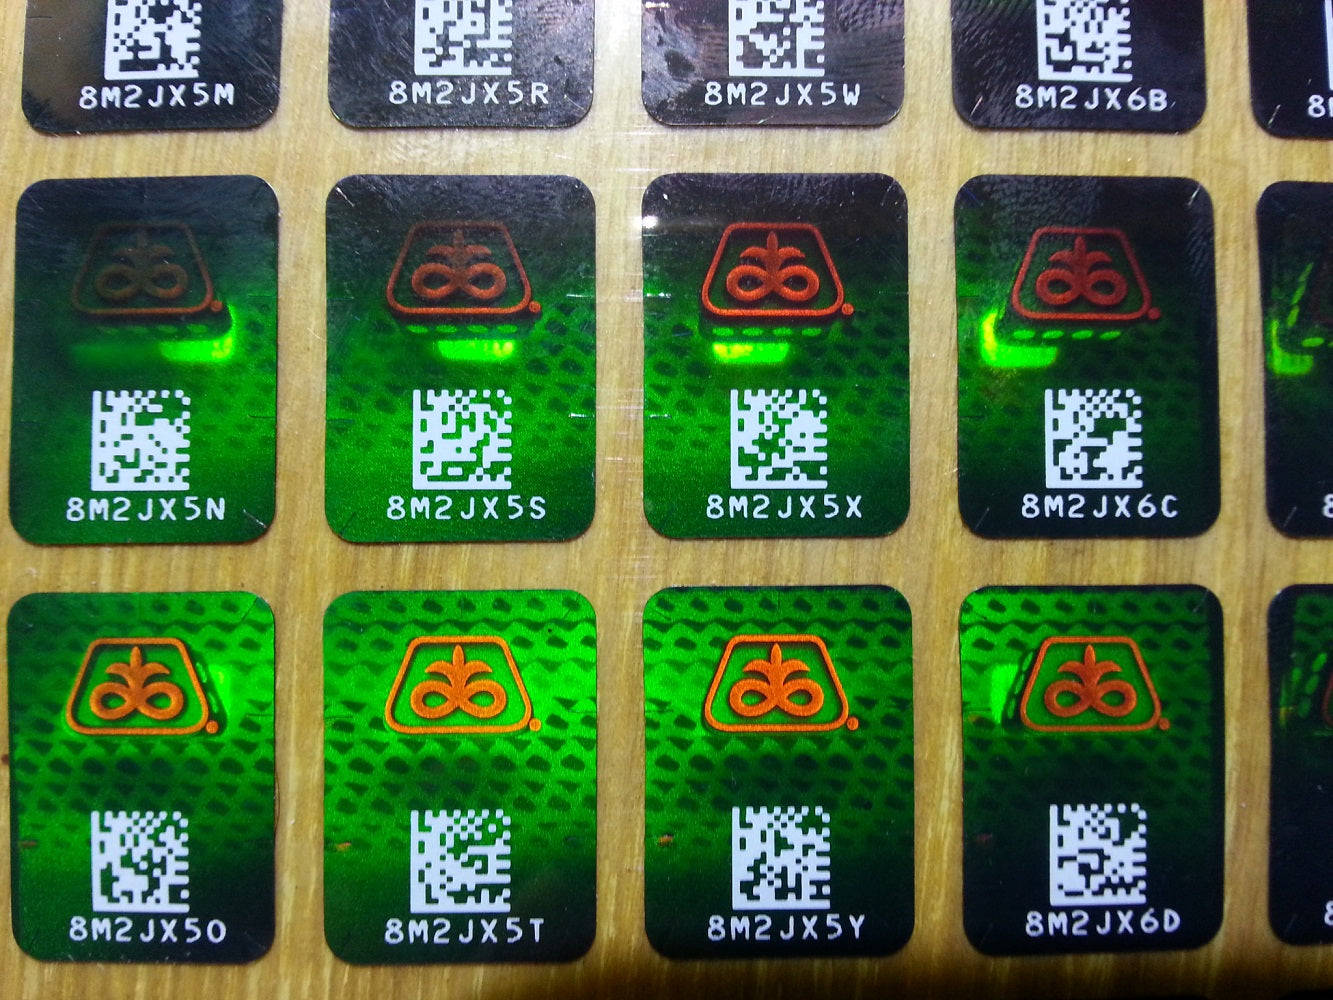 High technology anti-counterfeit original 3D photopolymer holographic laser label, reflective 3D partial veil security hologram Sticker